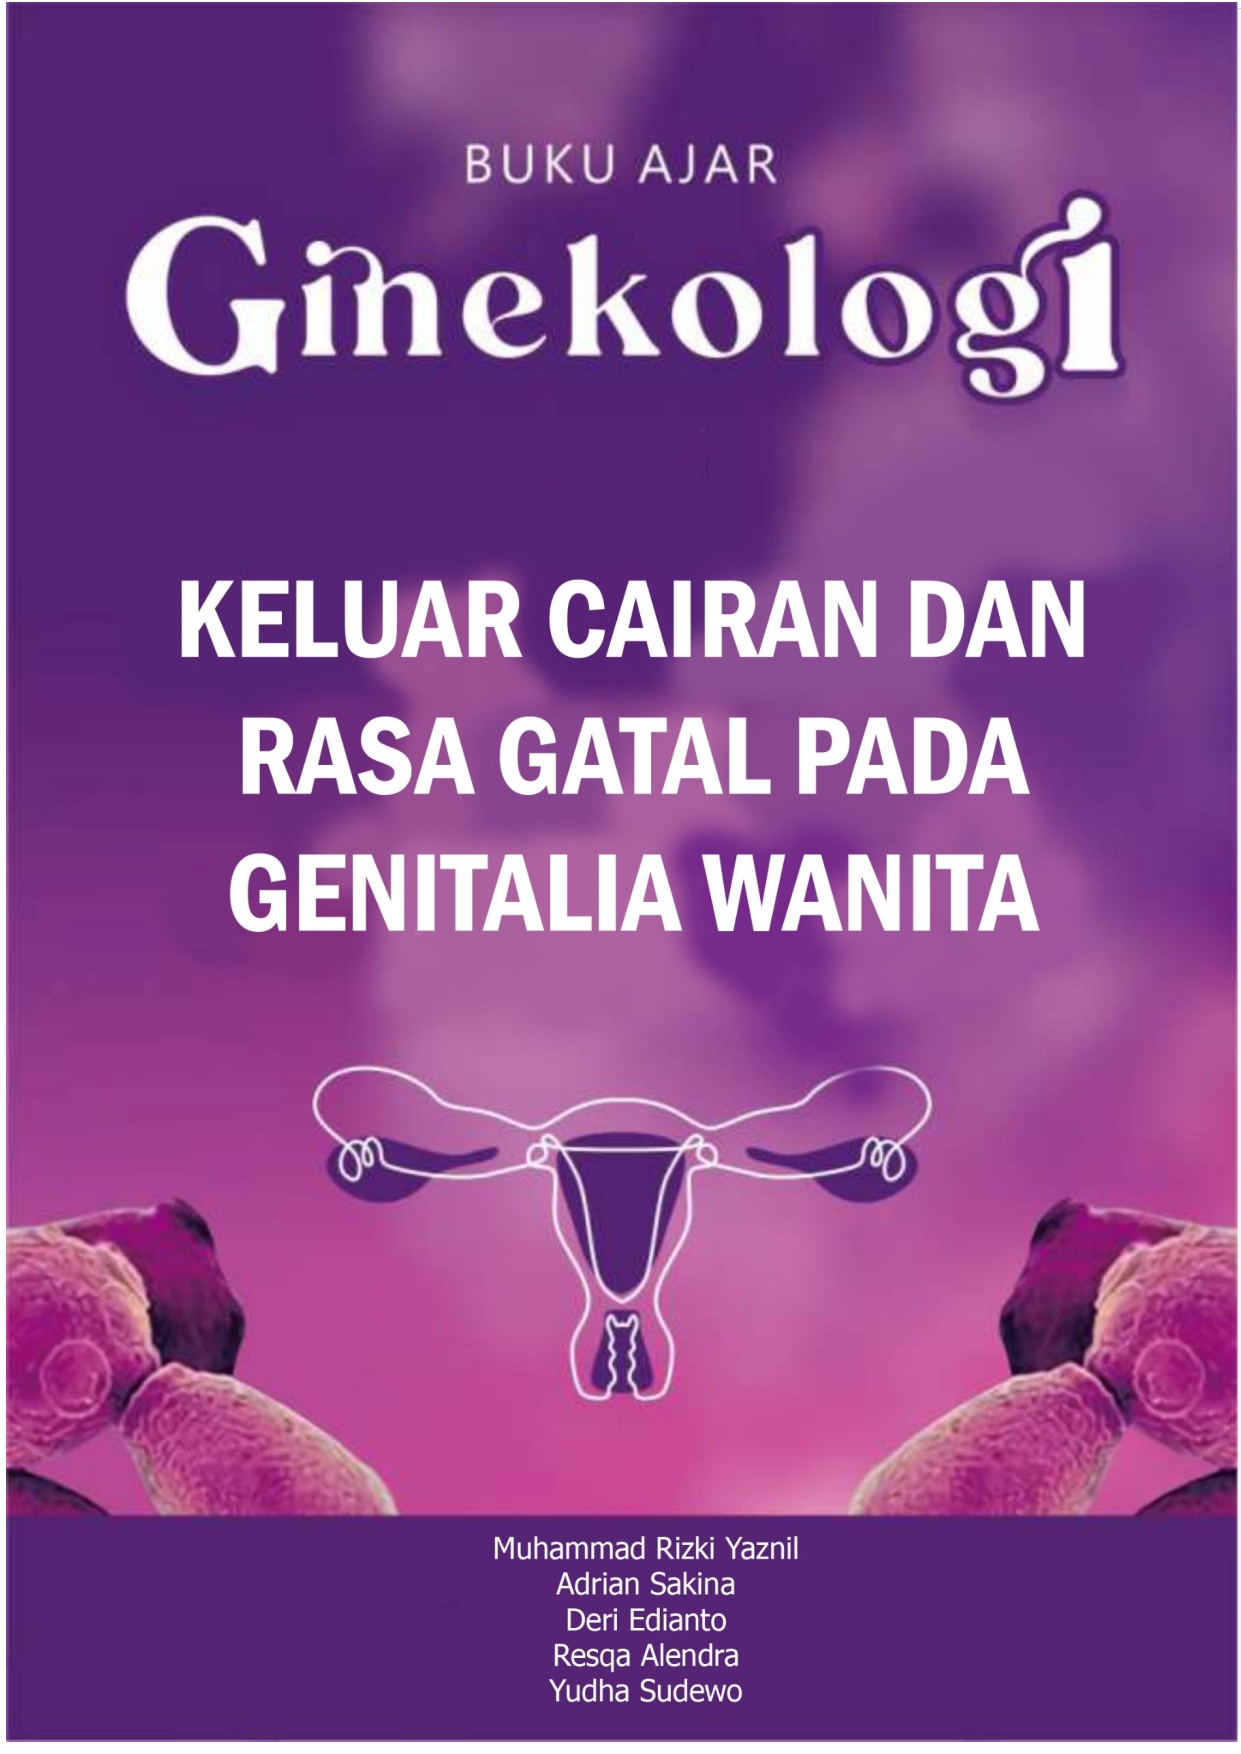 Cover of Buku Ajar Ginekologi Keluar Cairan dan Rasa Gatal  pada Genitalia Wanita